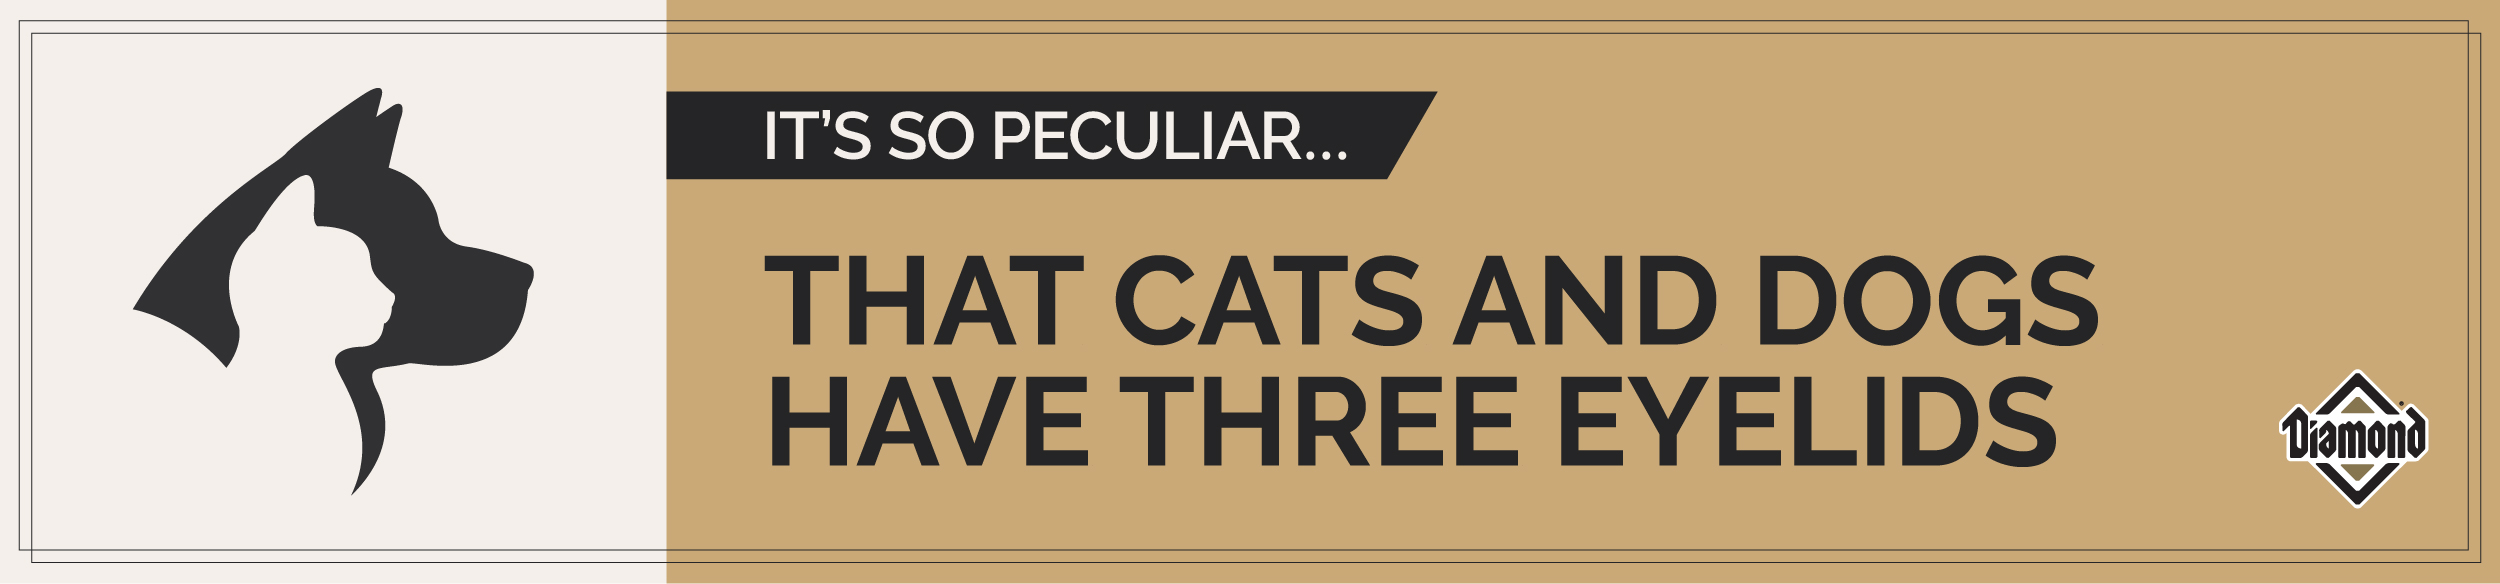 Peculiar Facts Pets Three Eyelids Info Graphic | Diamond Pet Foods